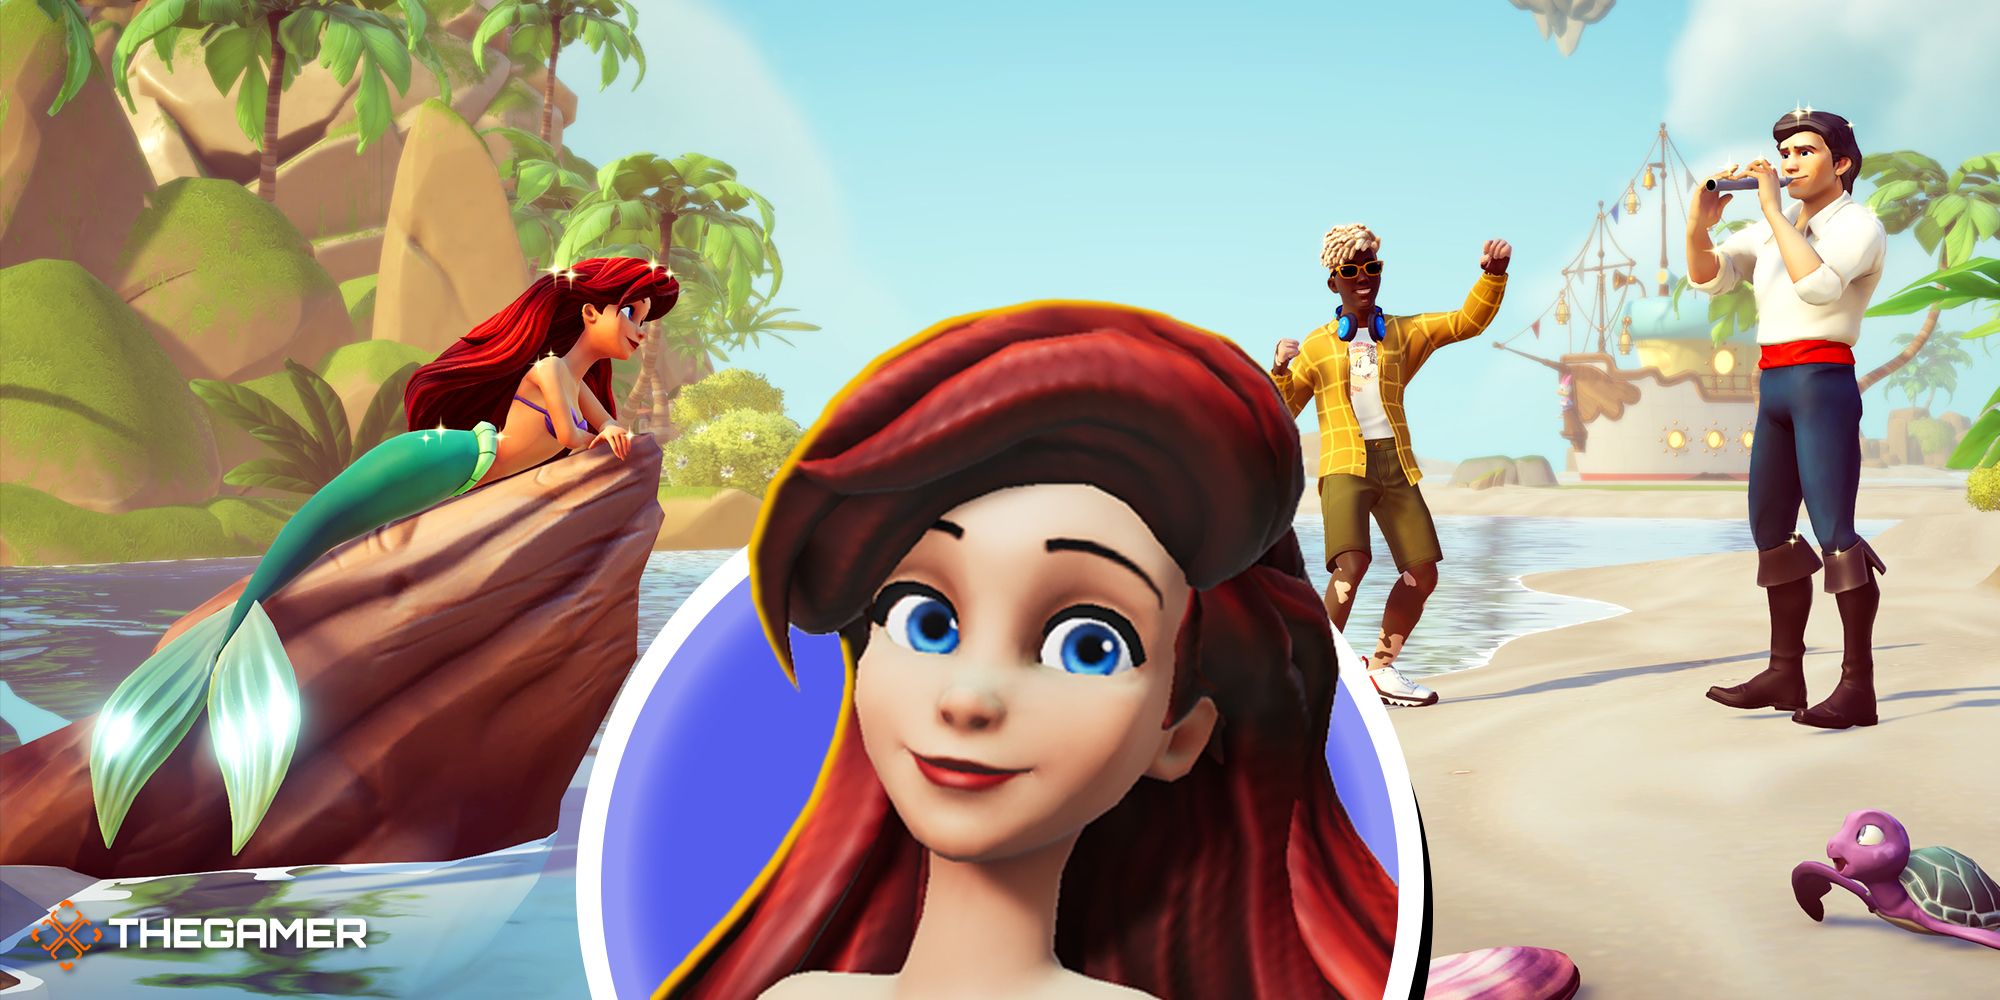 How To Unlock Ariel From The Little Mermaid In Disney Dreamlight Valley